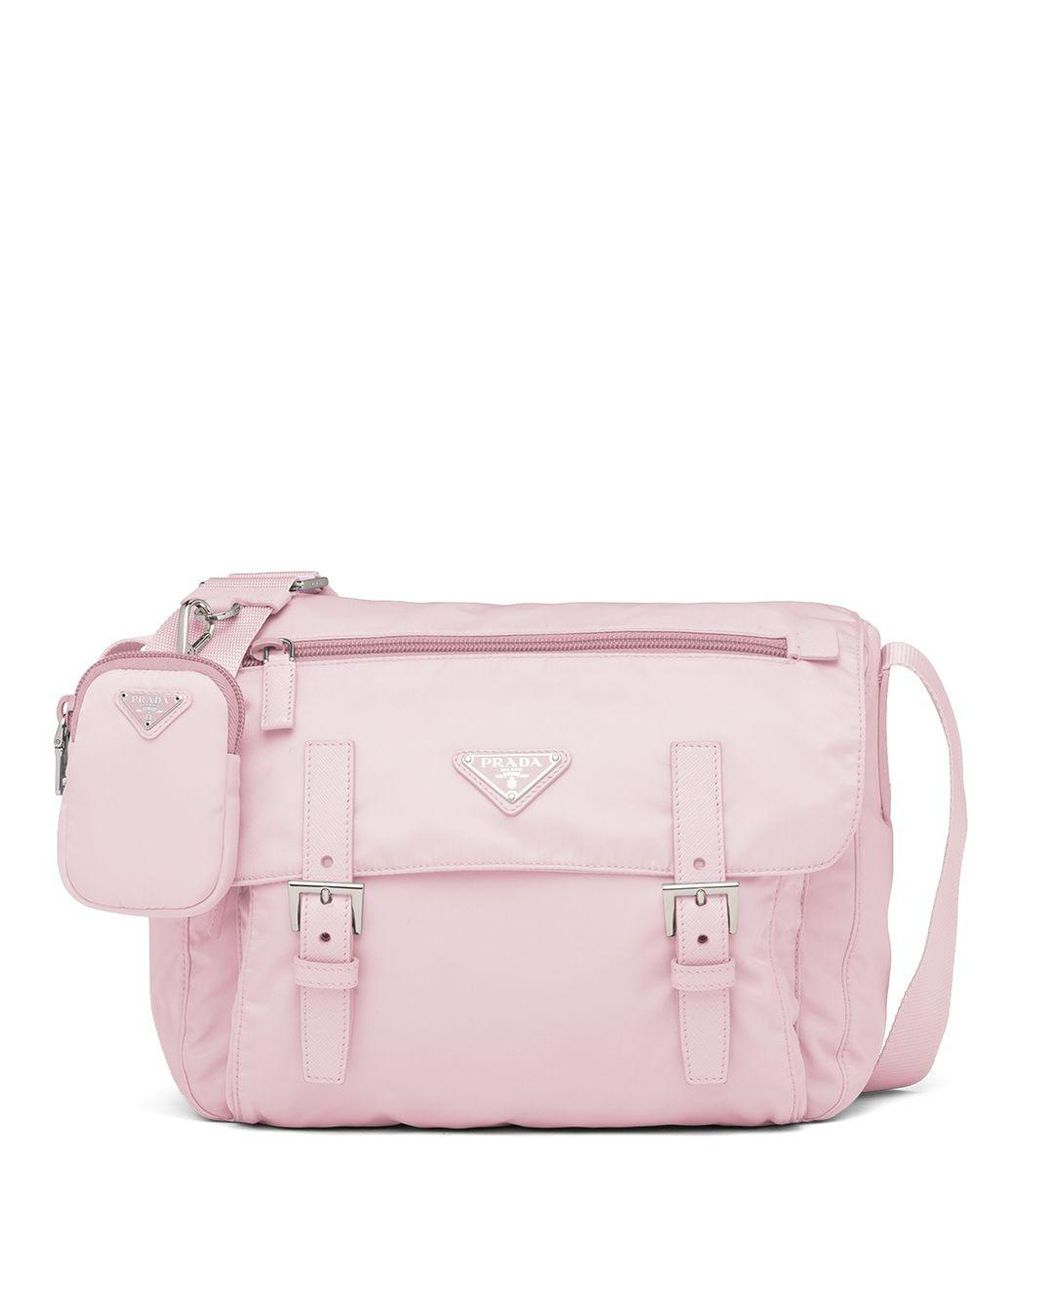 Prada Synthetic Re-nylon Shoulder Bag in Pink - Lyst